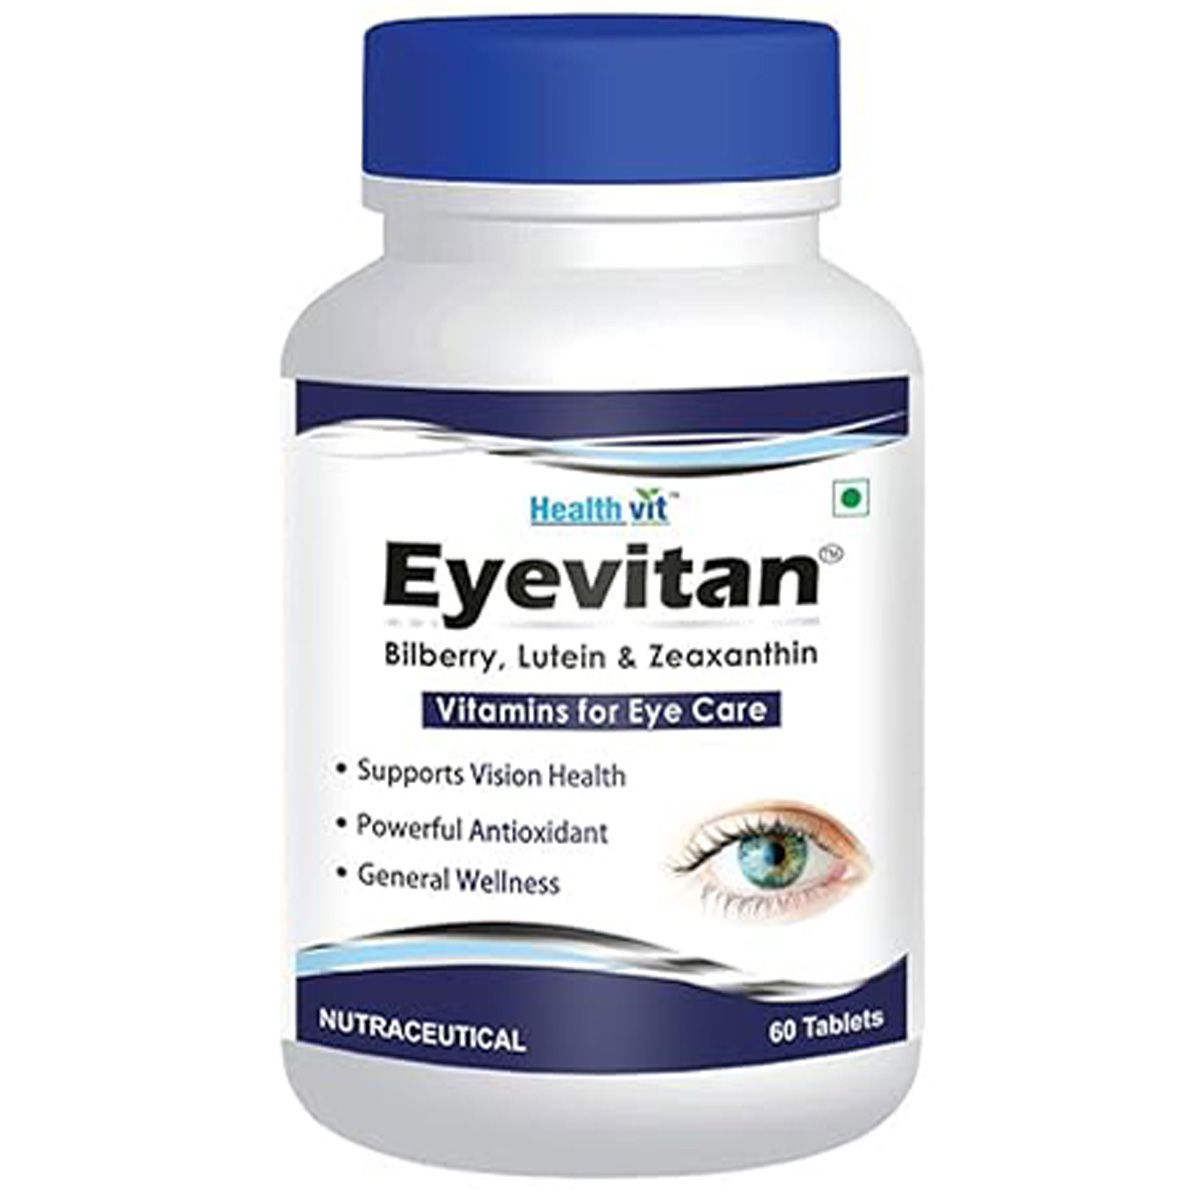 Buy Healthvit Eyevitan Vitamins for Eye Care, 60 Tablets Online